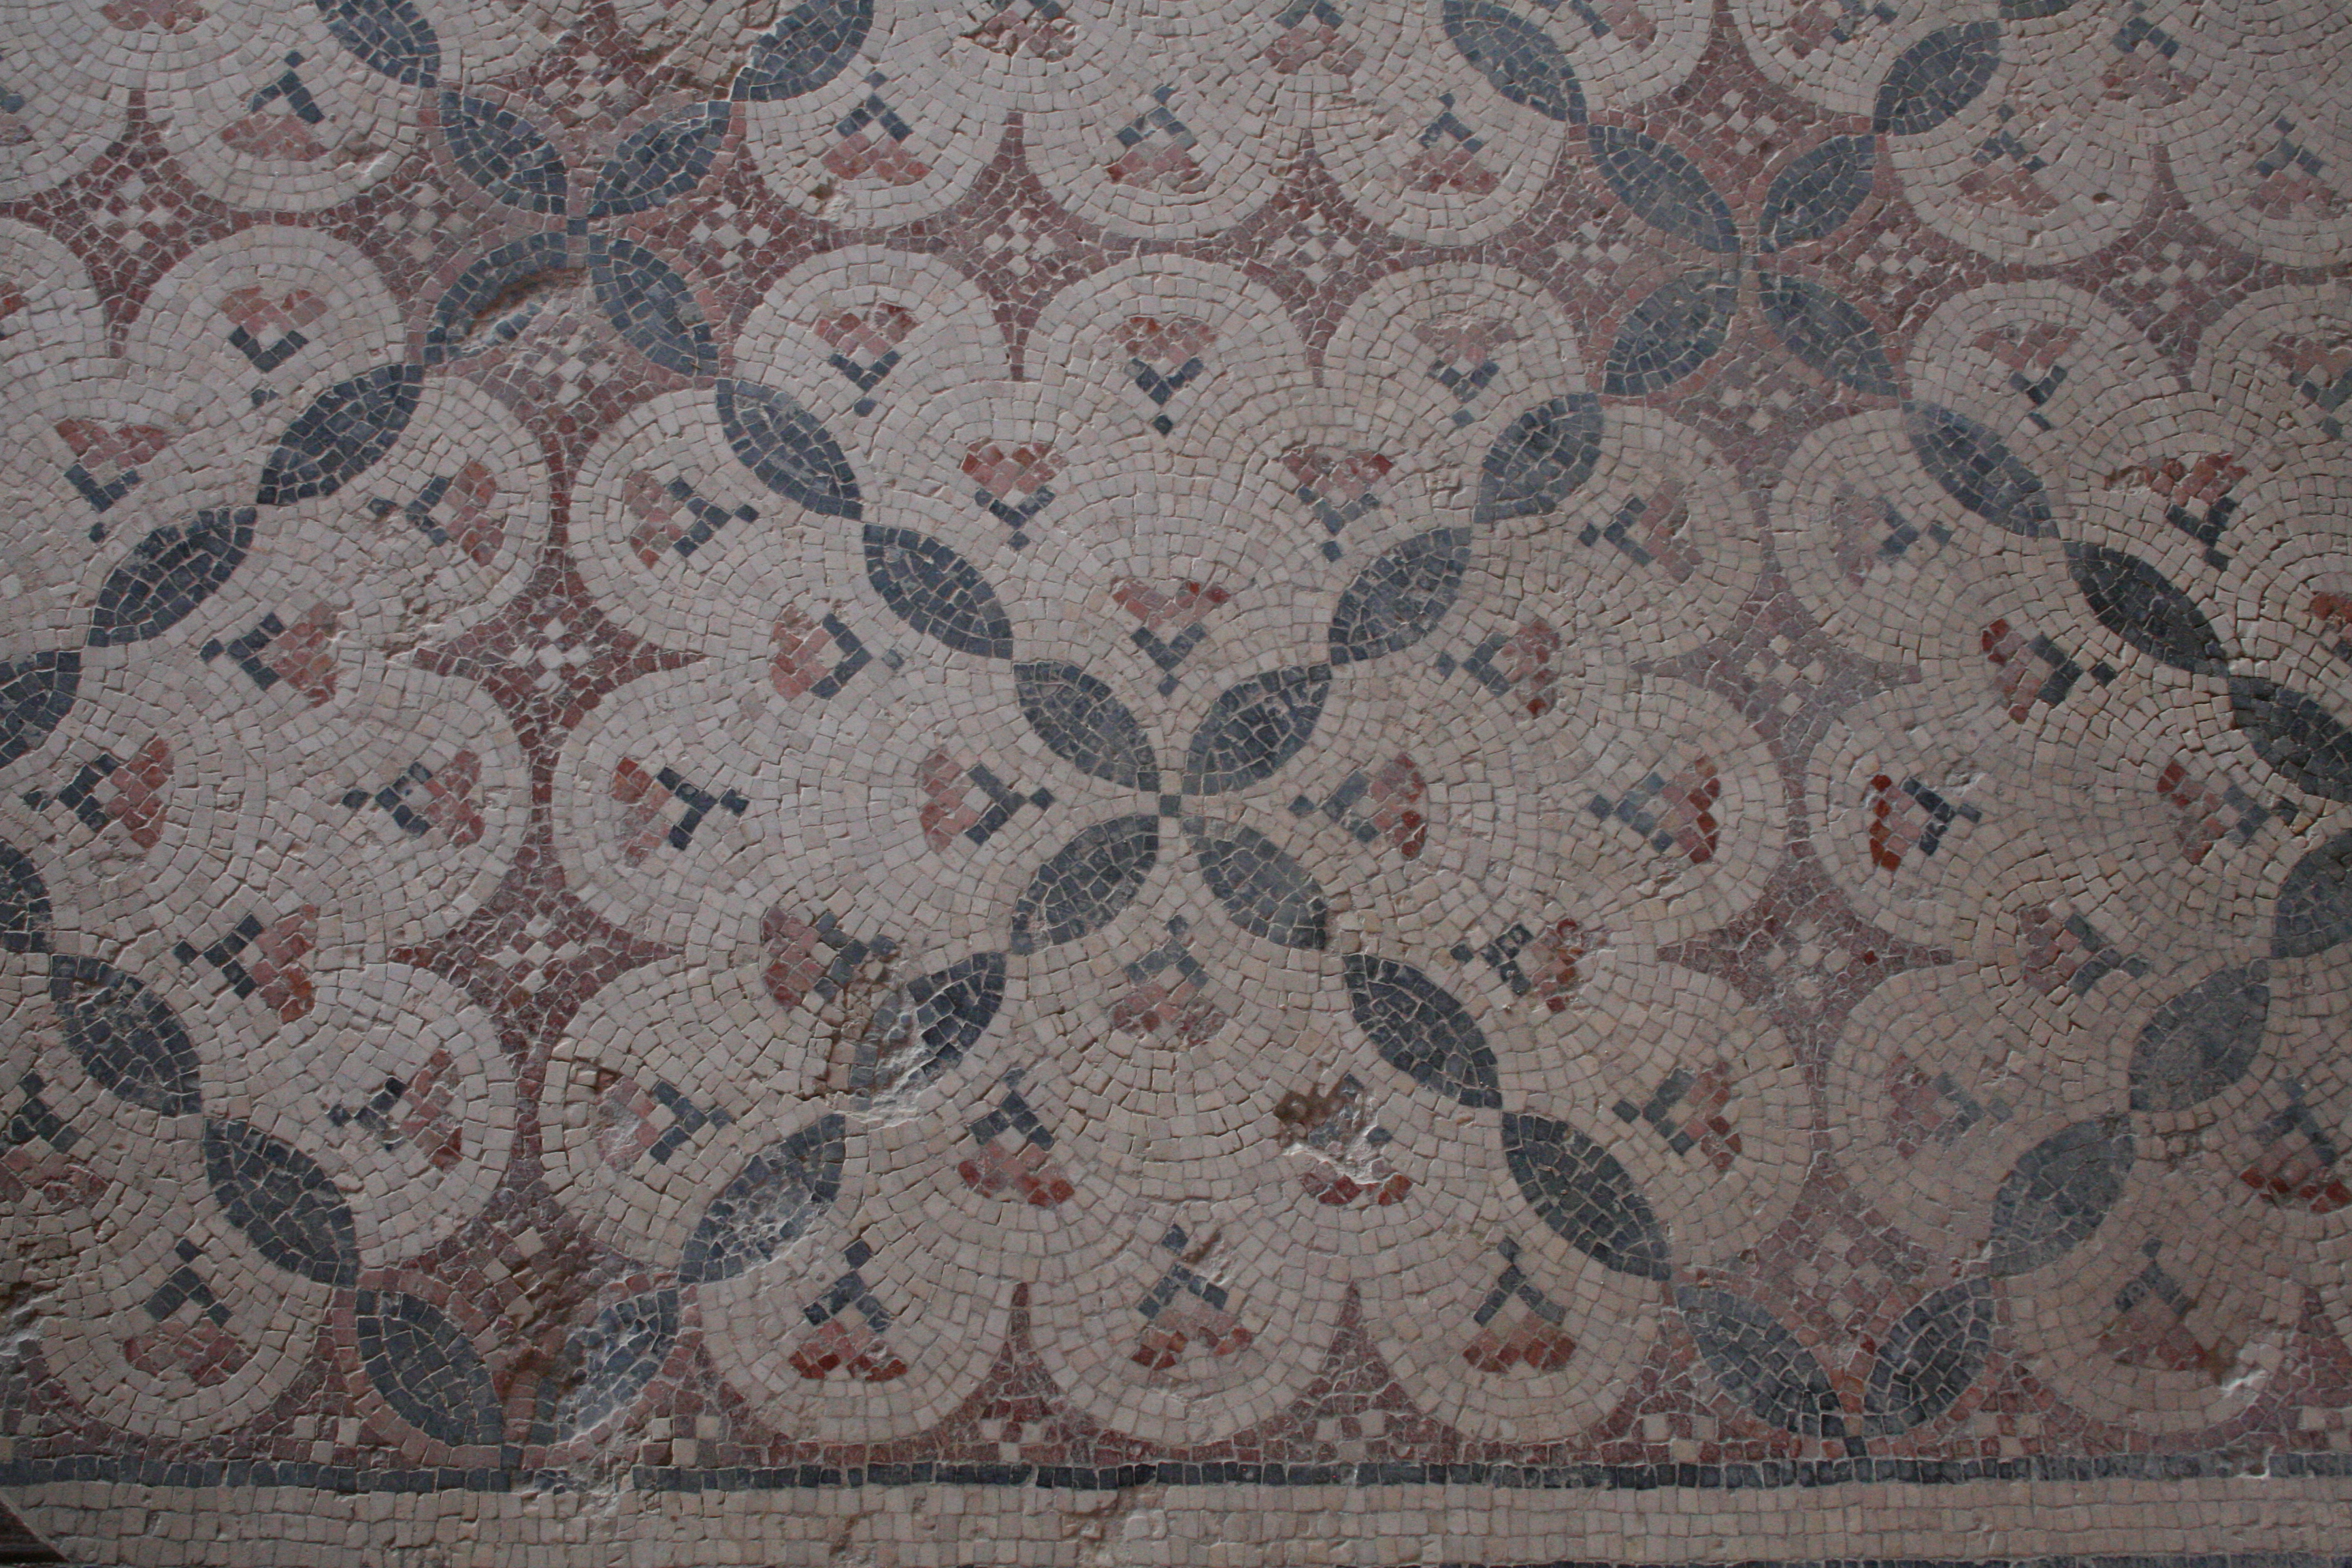 Mosaic floor in Sepphoris (Zippori) in the Galilee. Photo courtesy of Gary Asperschlager.